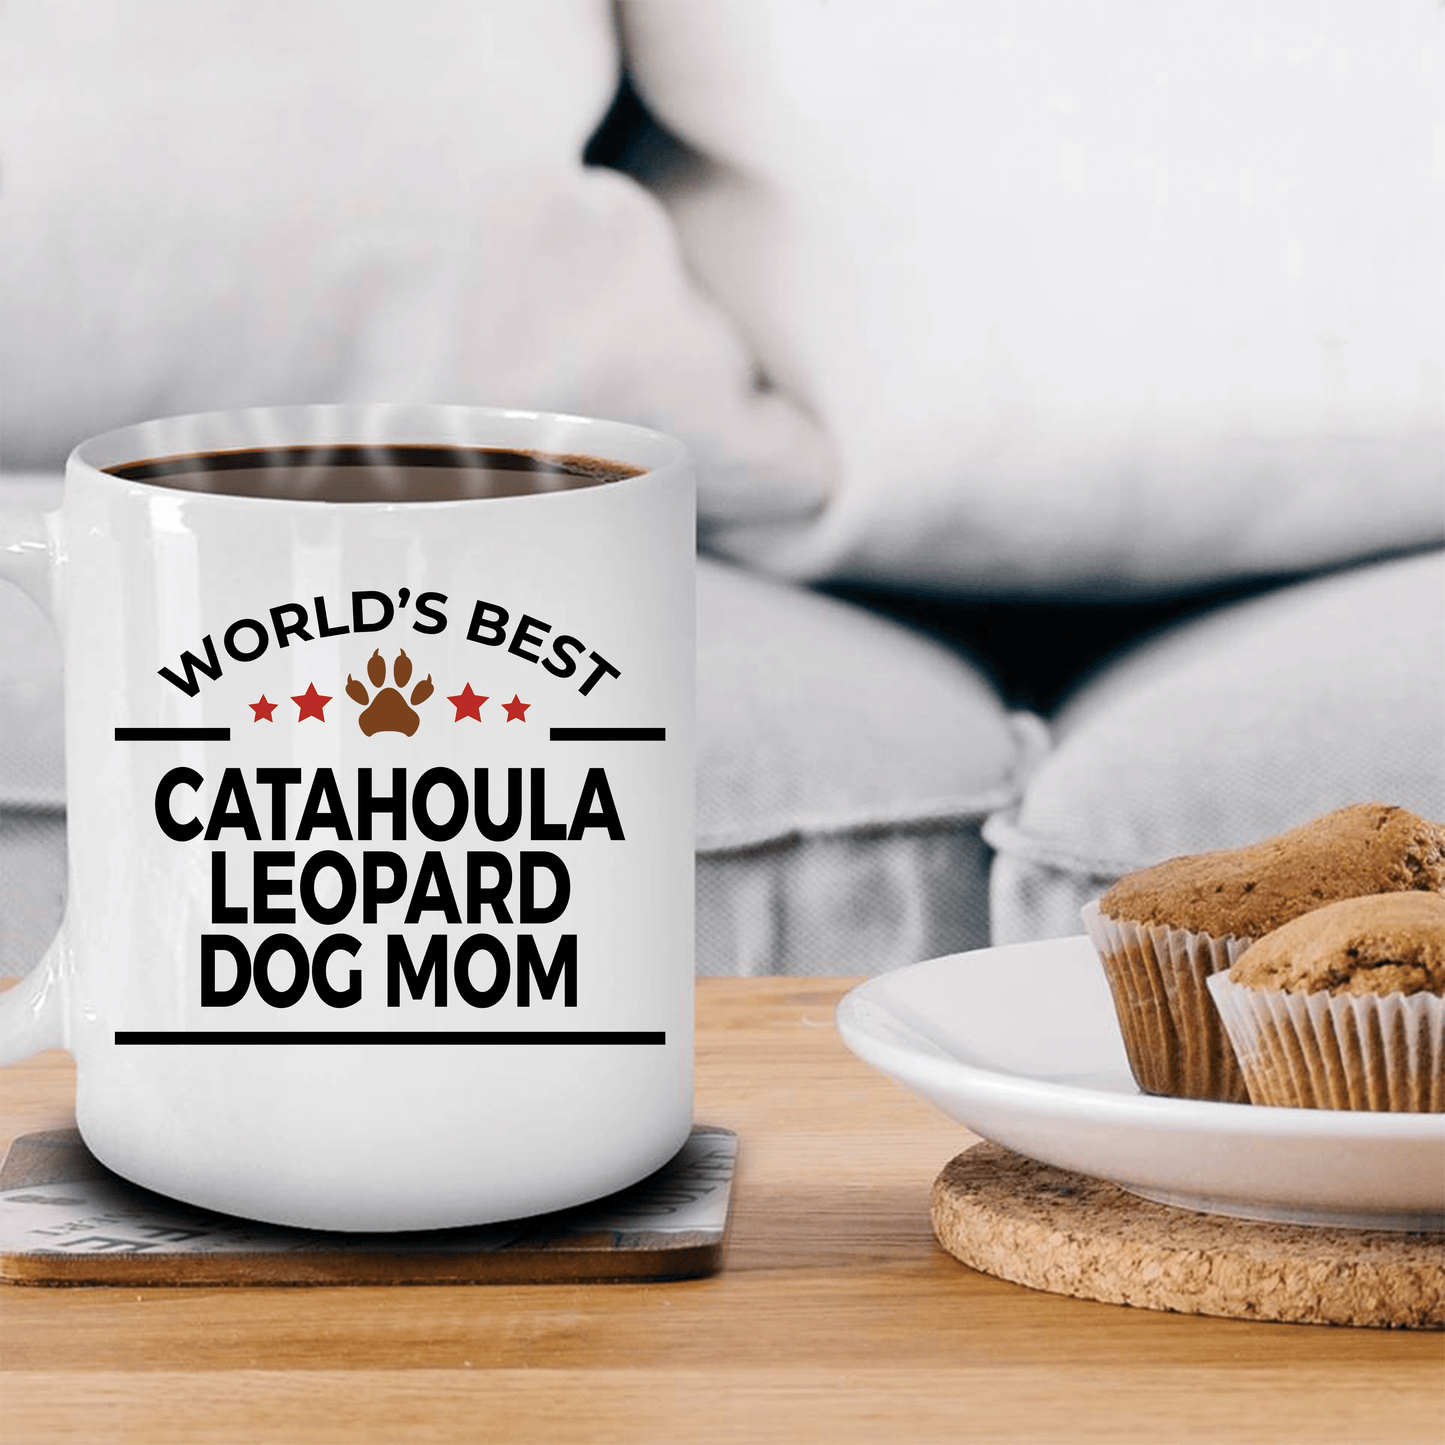 Catahoula Leopard Dog Lover Gift World's Best Mom Birthday Mother's Day White Ceramic Coffee Mug